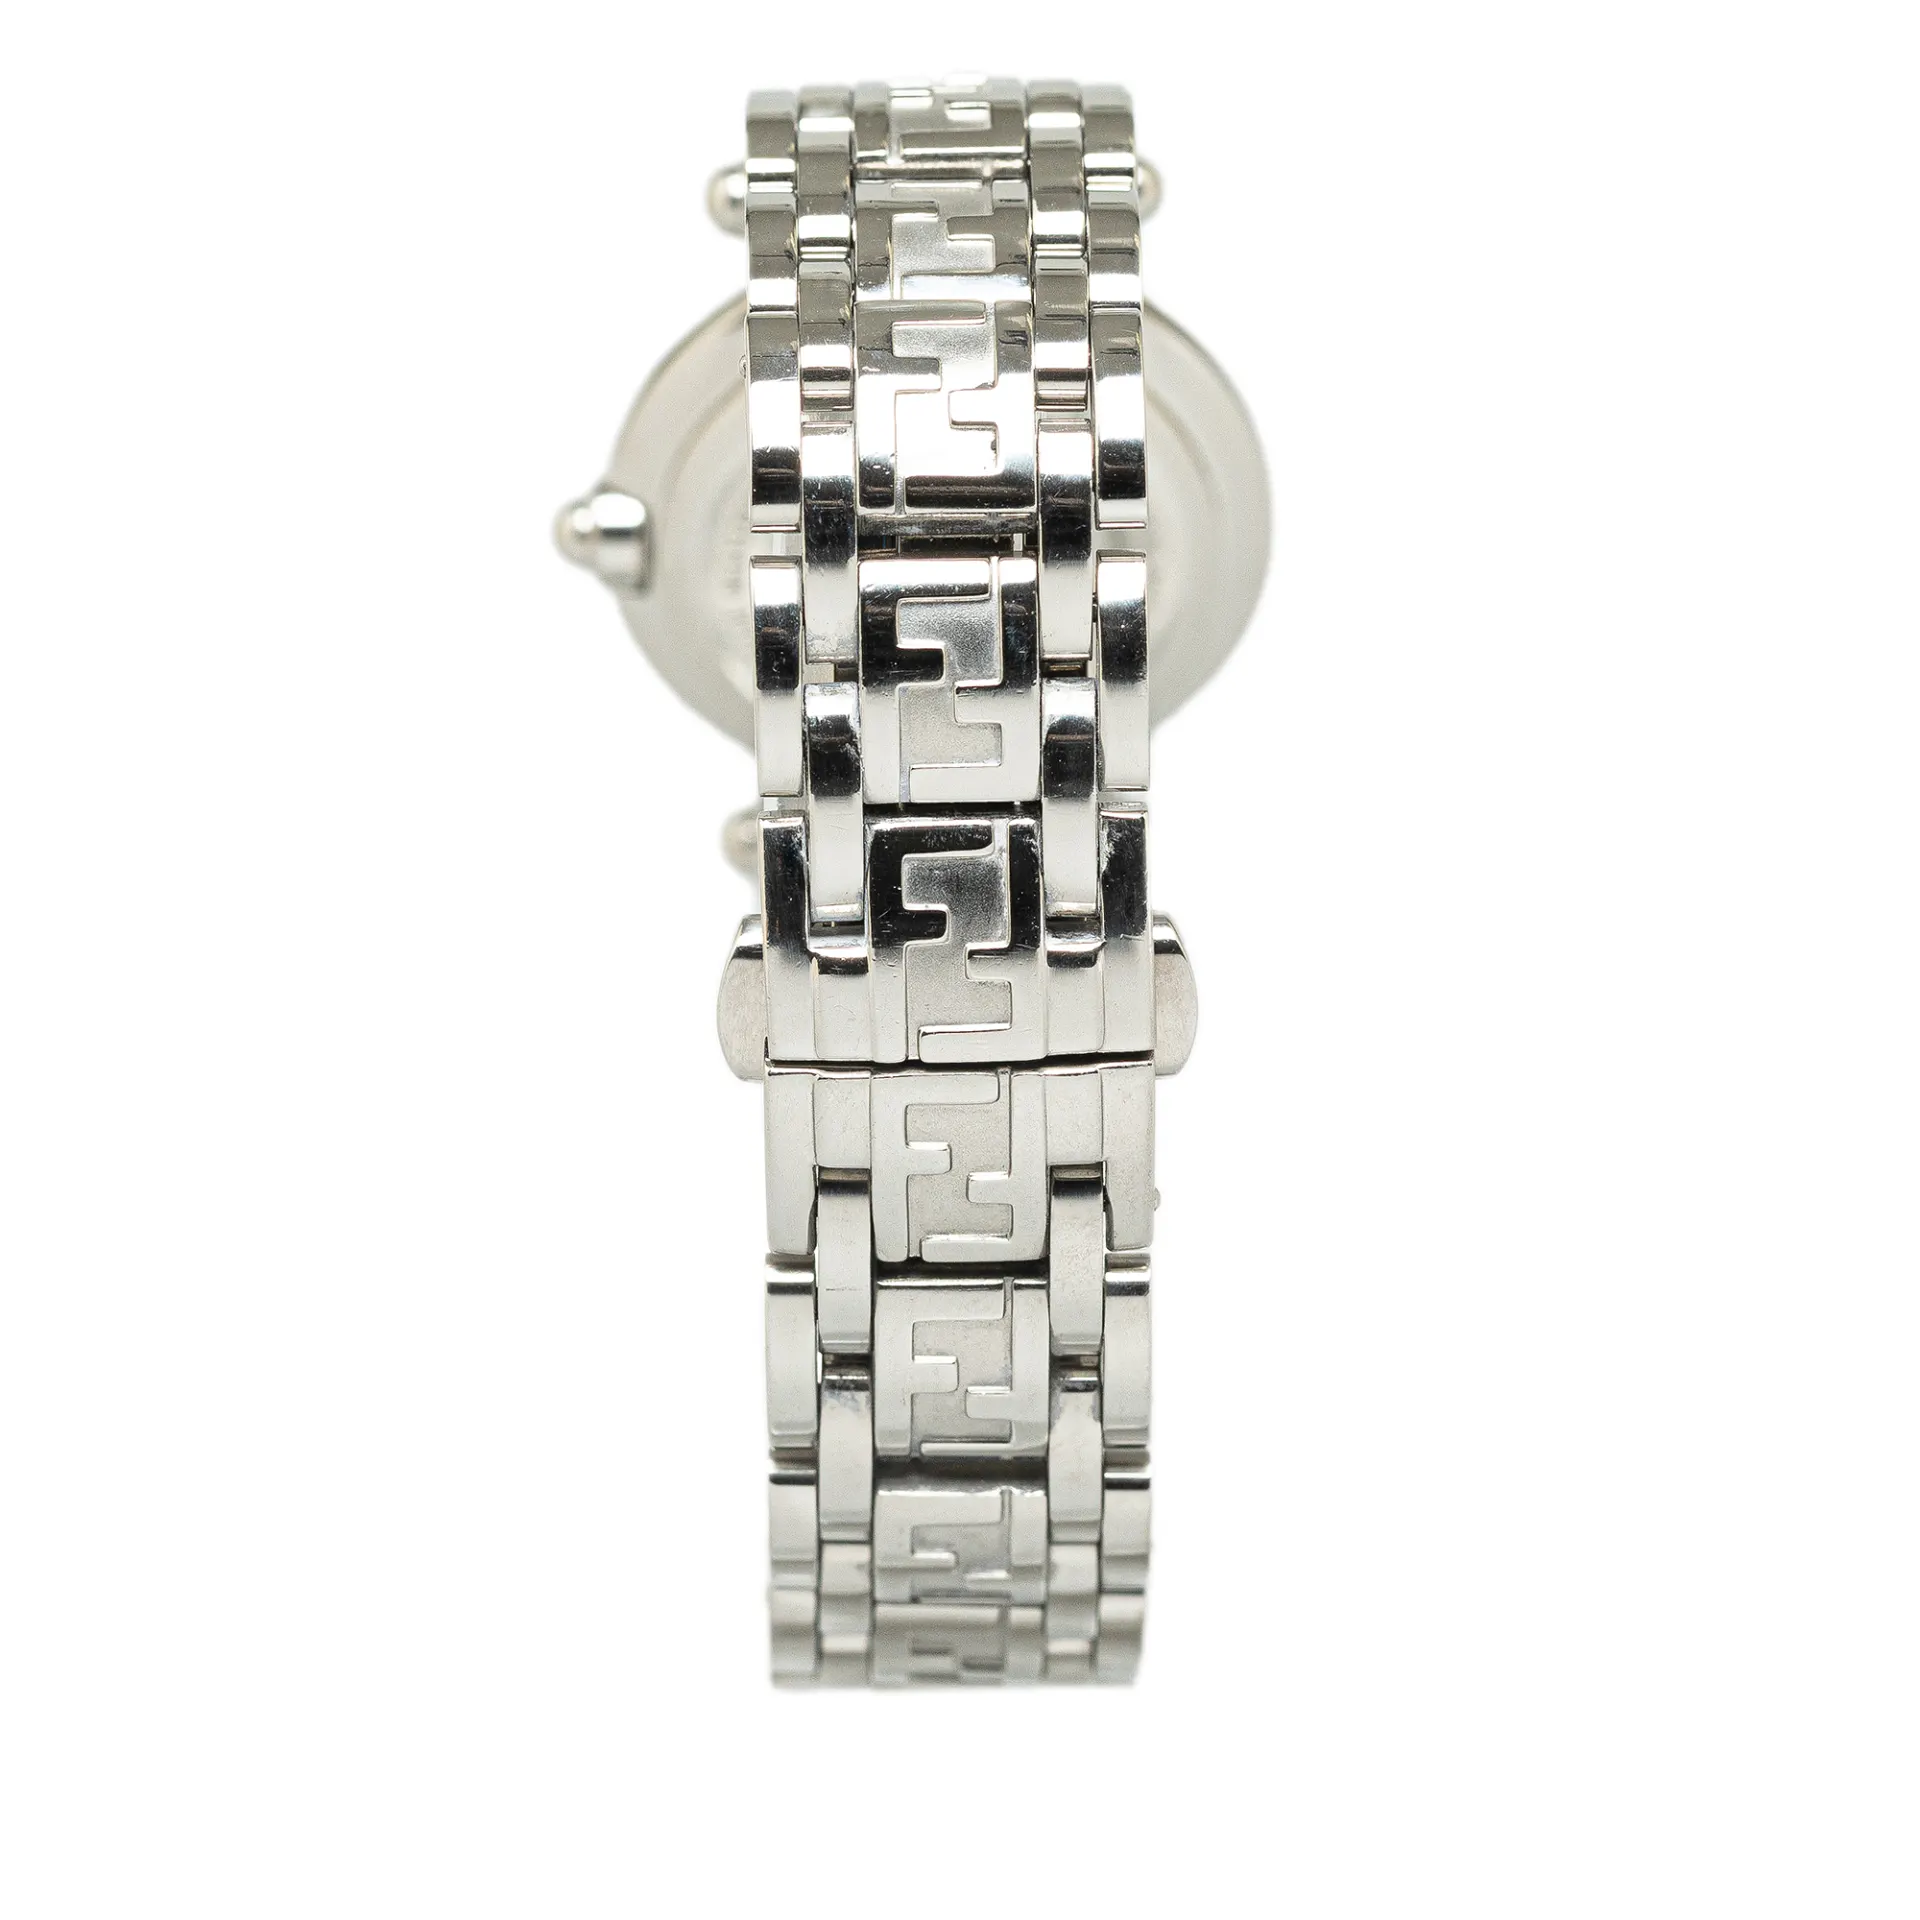 Fendi Quartz Stainless Steel 750l Watch